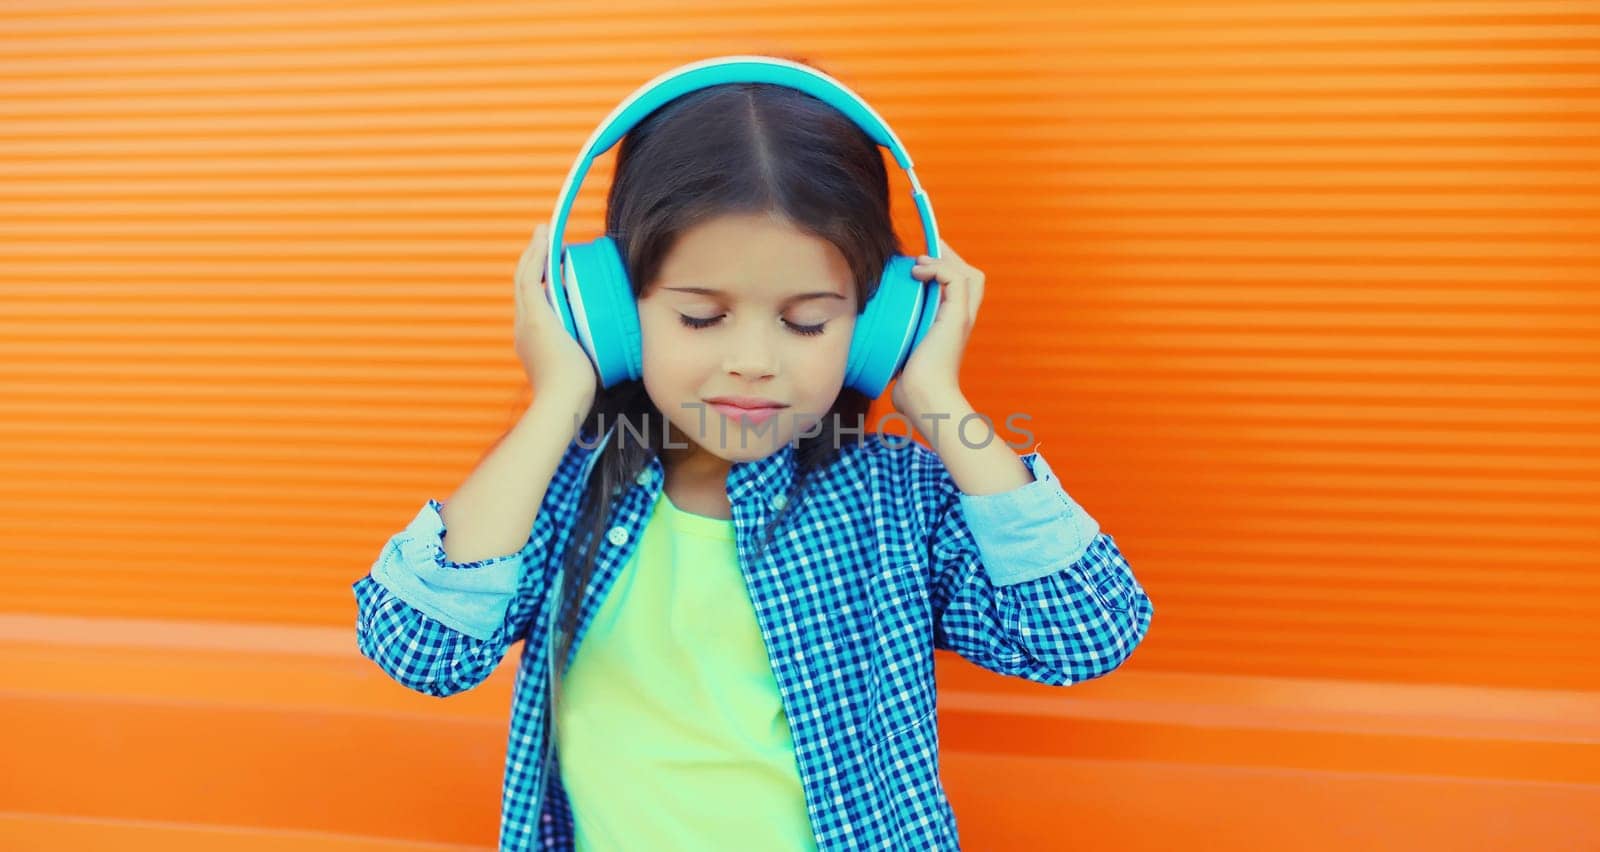 Portrait of happy little girl child in blue wireless headphones listening to music on orange background